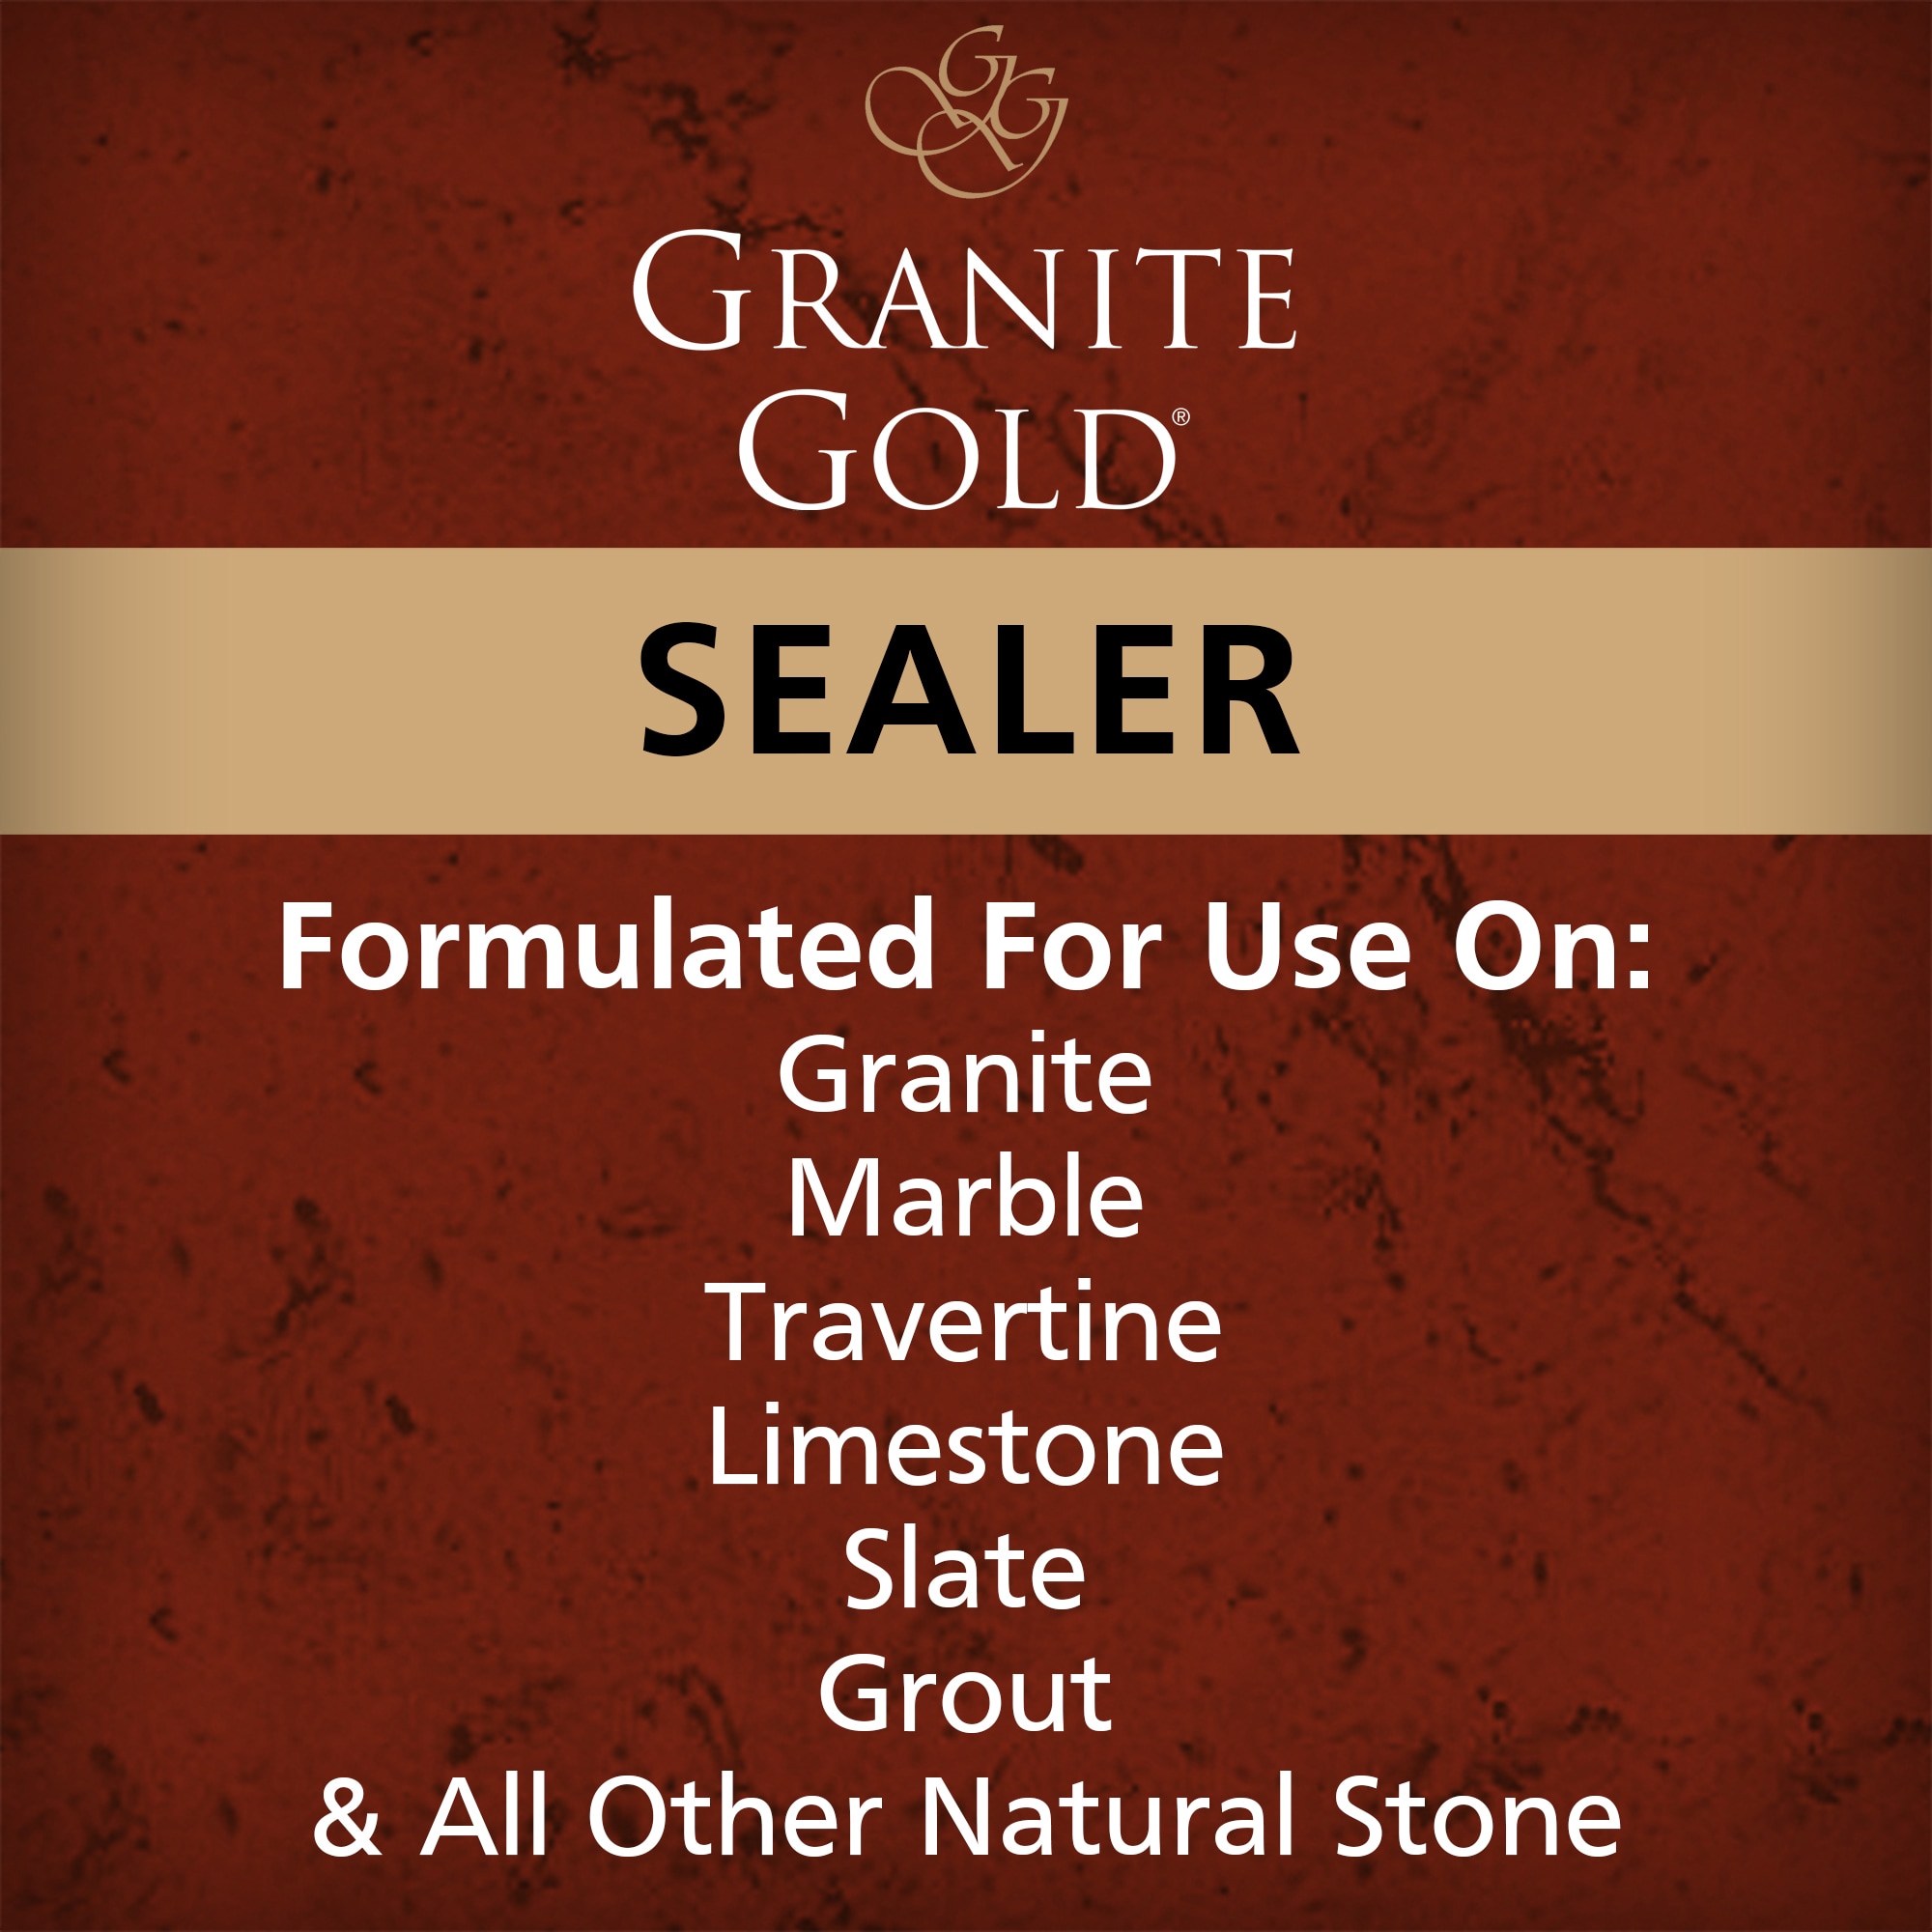 Granite Gold Polish Spray, Streak-Free Shine for Granite, Quartz, Marble,  Travertine, Natural Stone Countertops, 24 Fl Oz (Pack of 1)